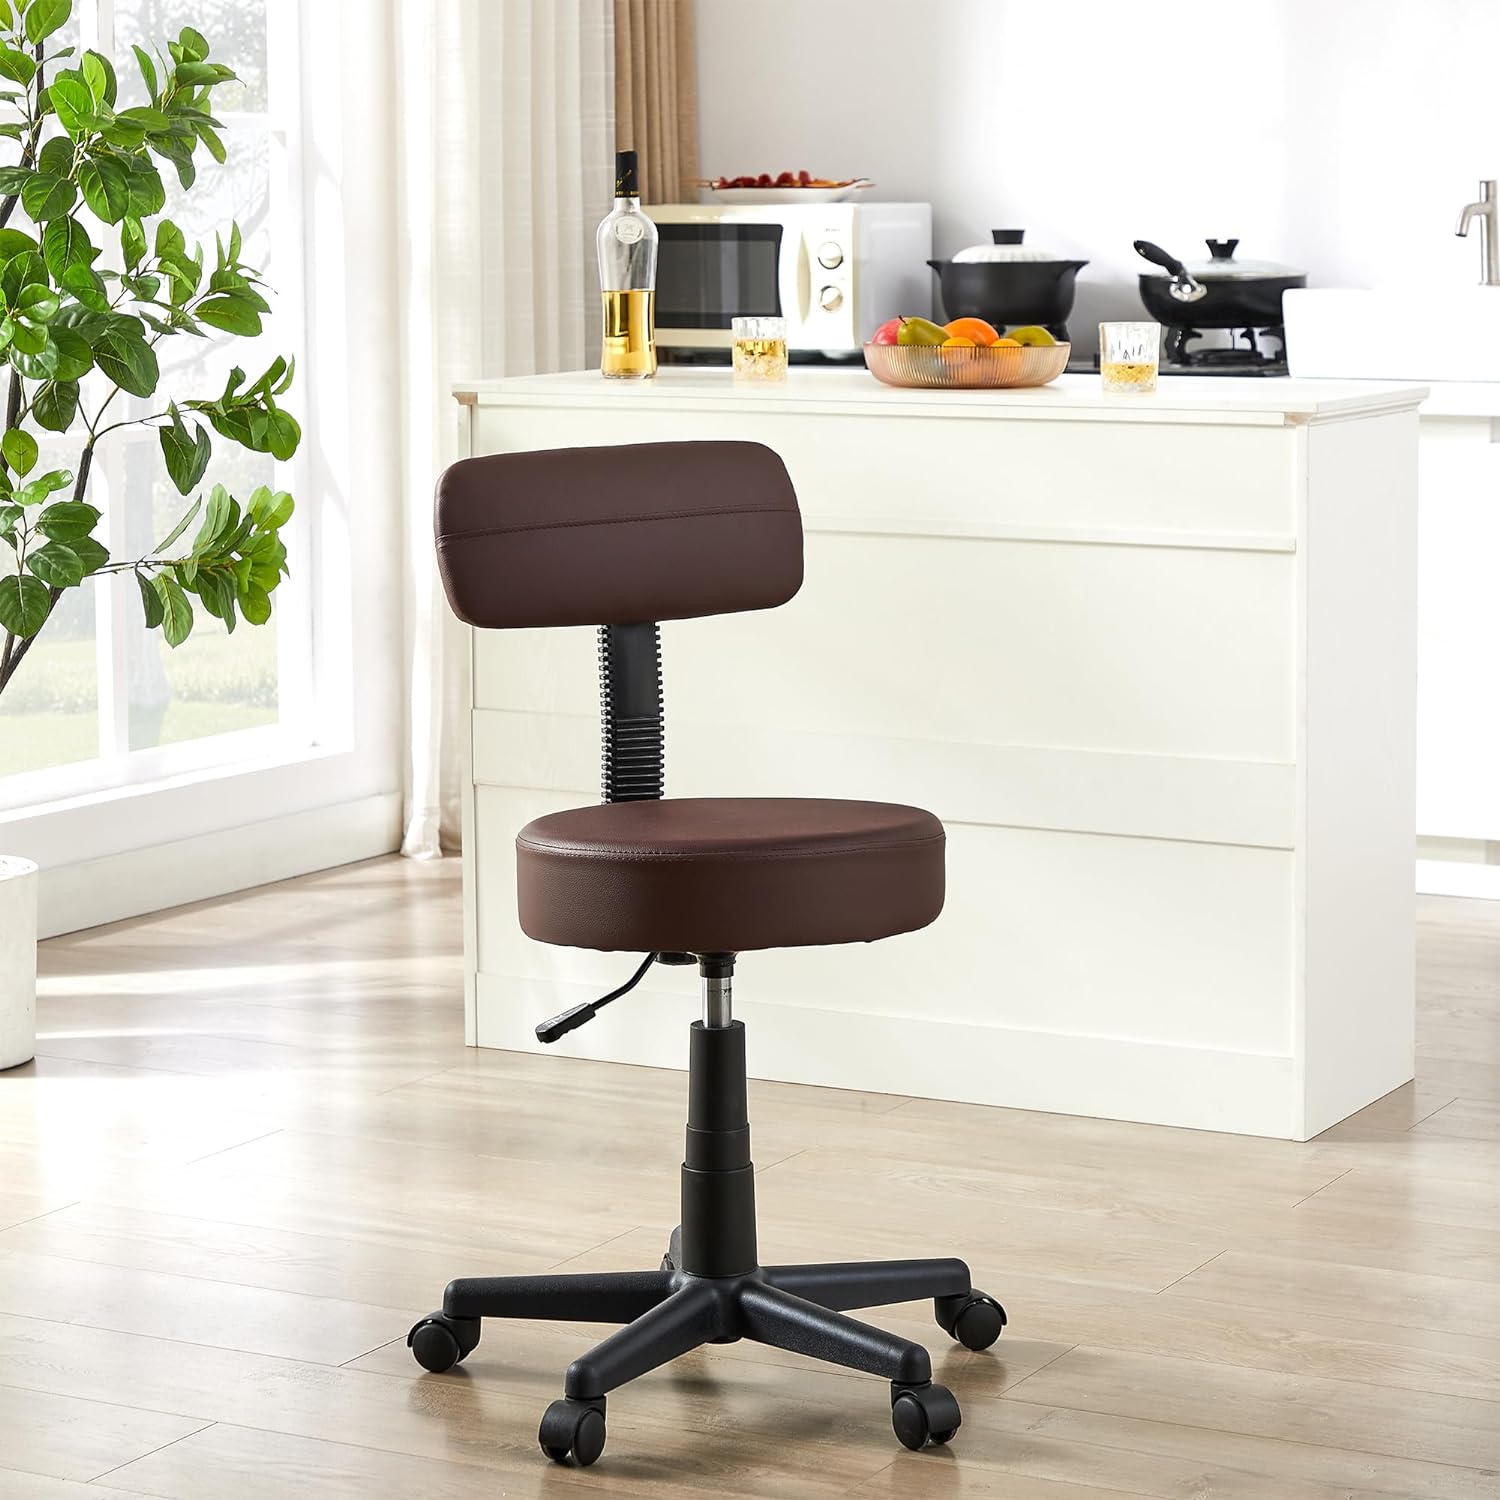 Shop Office Furniture, Office Chairs, Desks, Decor